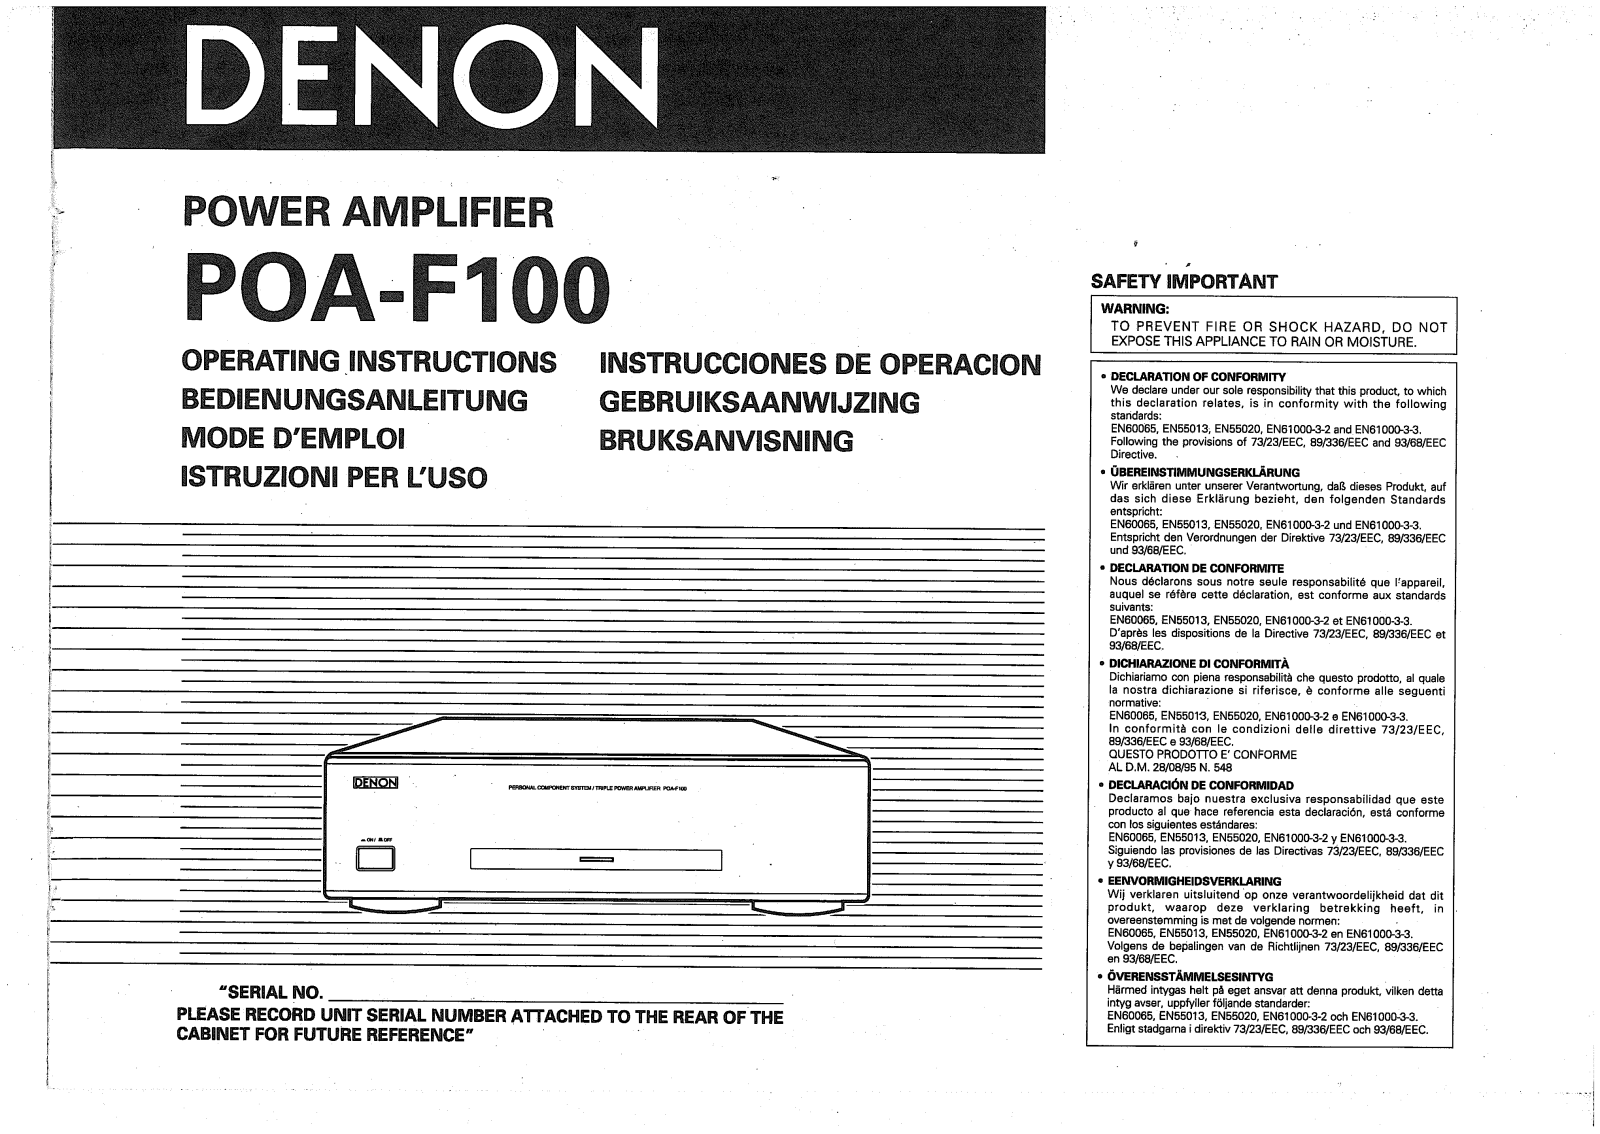 Denon POA-F100 Manual